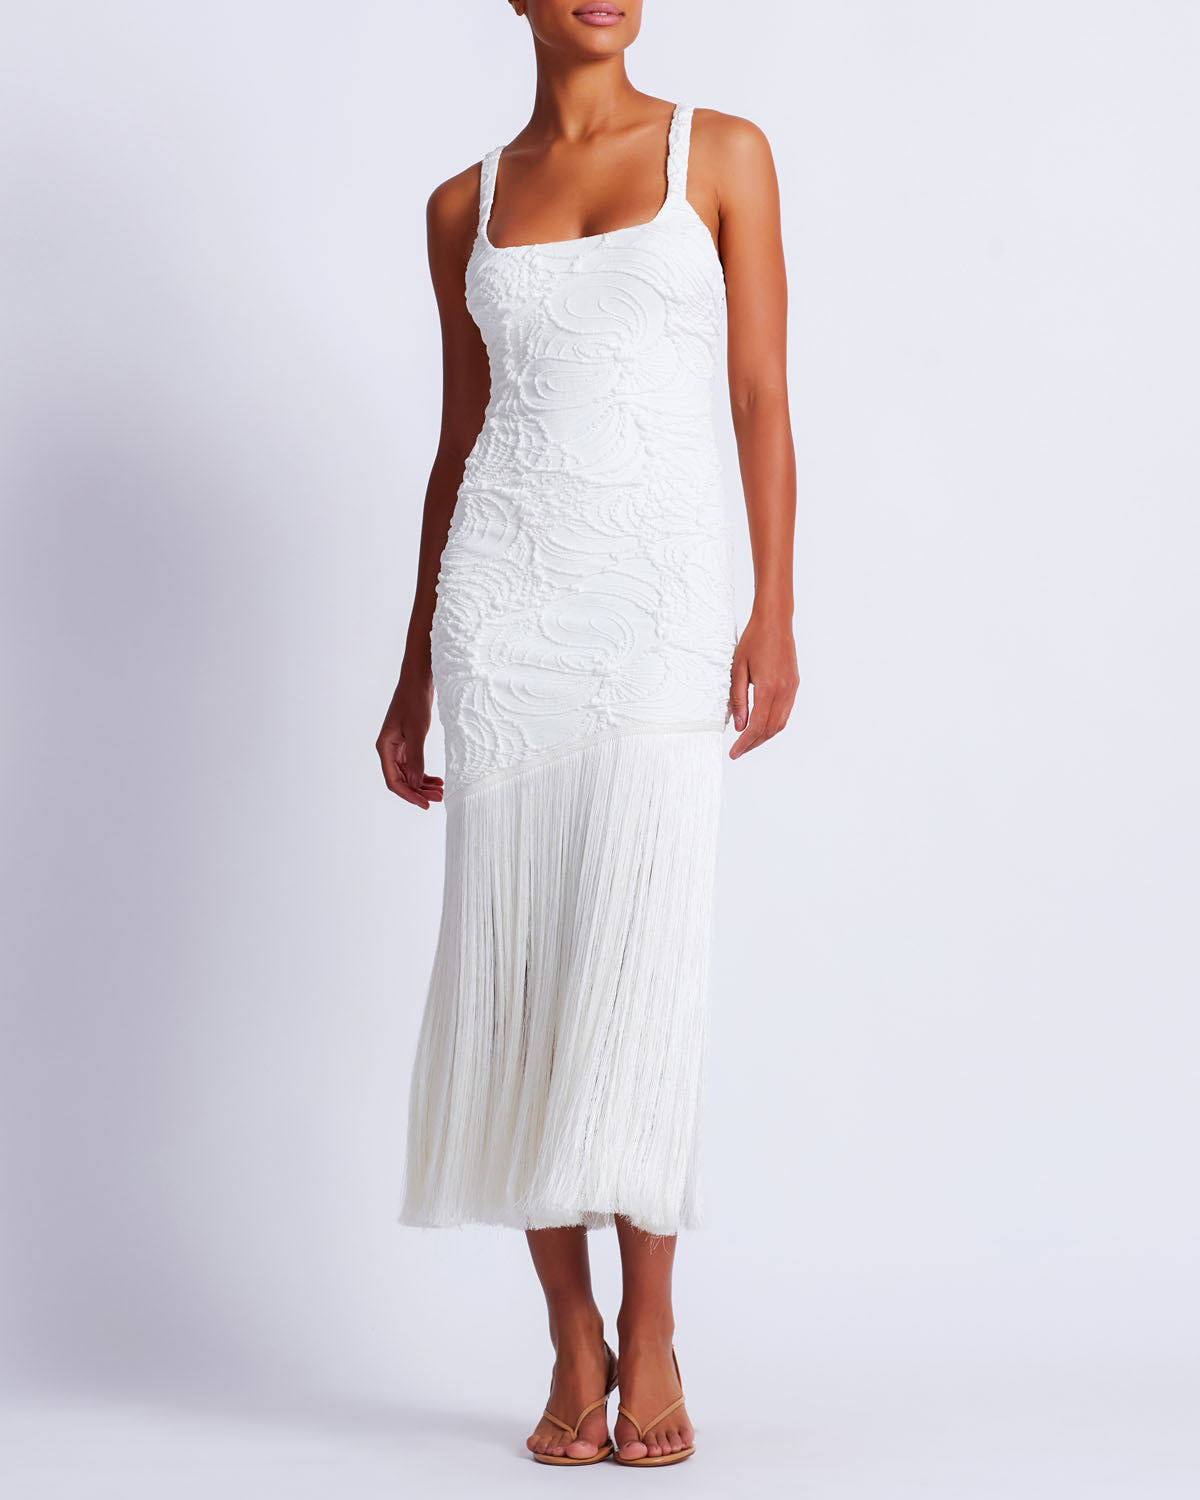 PatBo Jacquard Fringe Maxi Dress - Premium Long dress from Marina St Barth - Just $895! Shop now at Marina St Barth